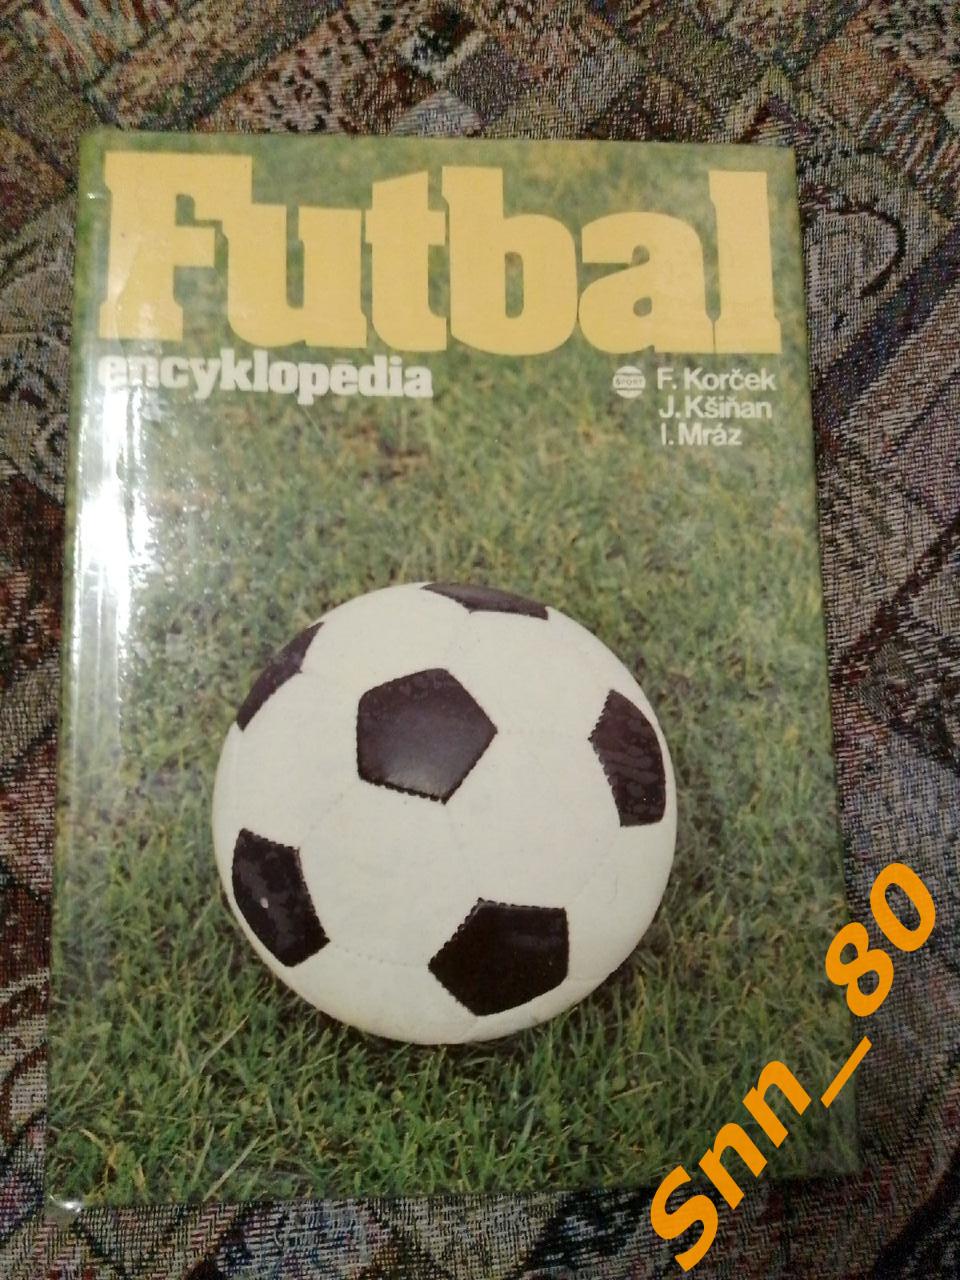 6 Энциклопедия футбола Futbal encyklopedia 1986 F.Korcek J.Ksinan I.Mraz (31,8)